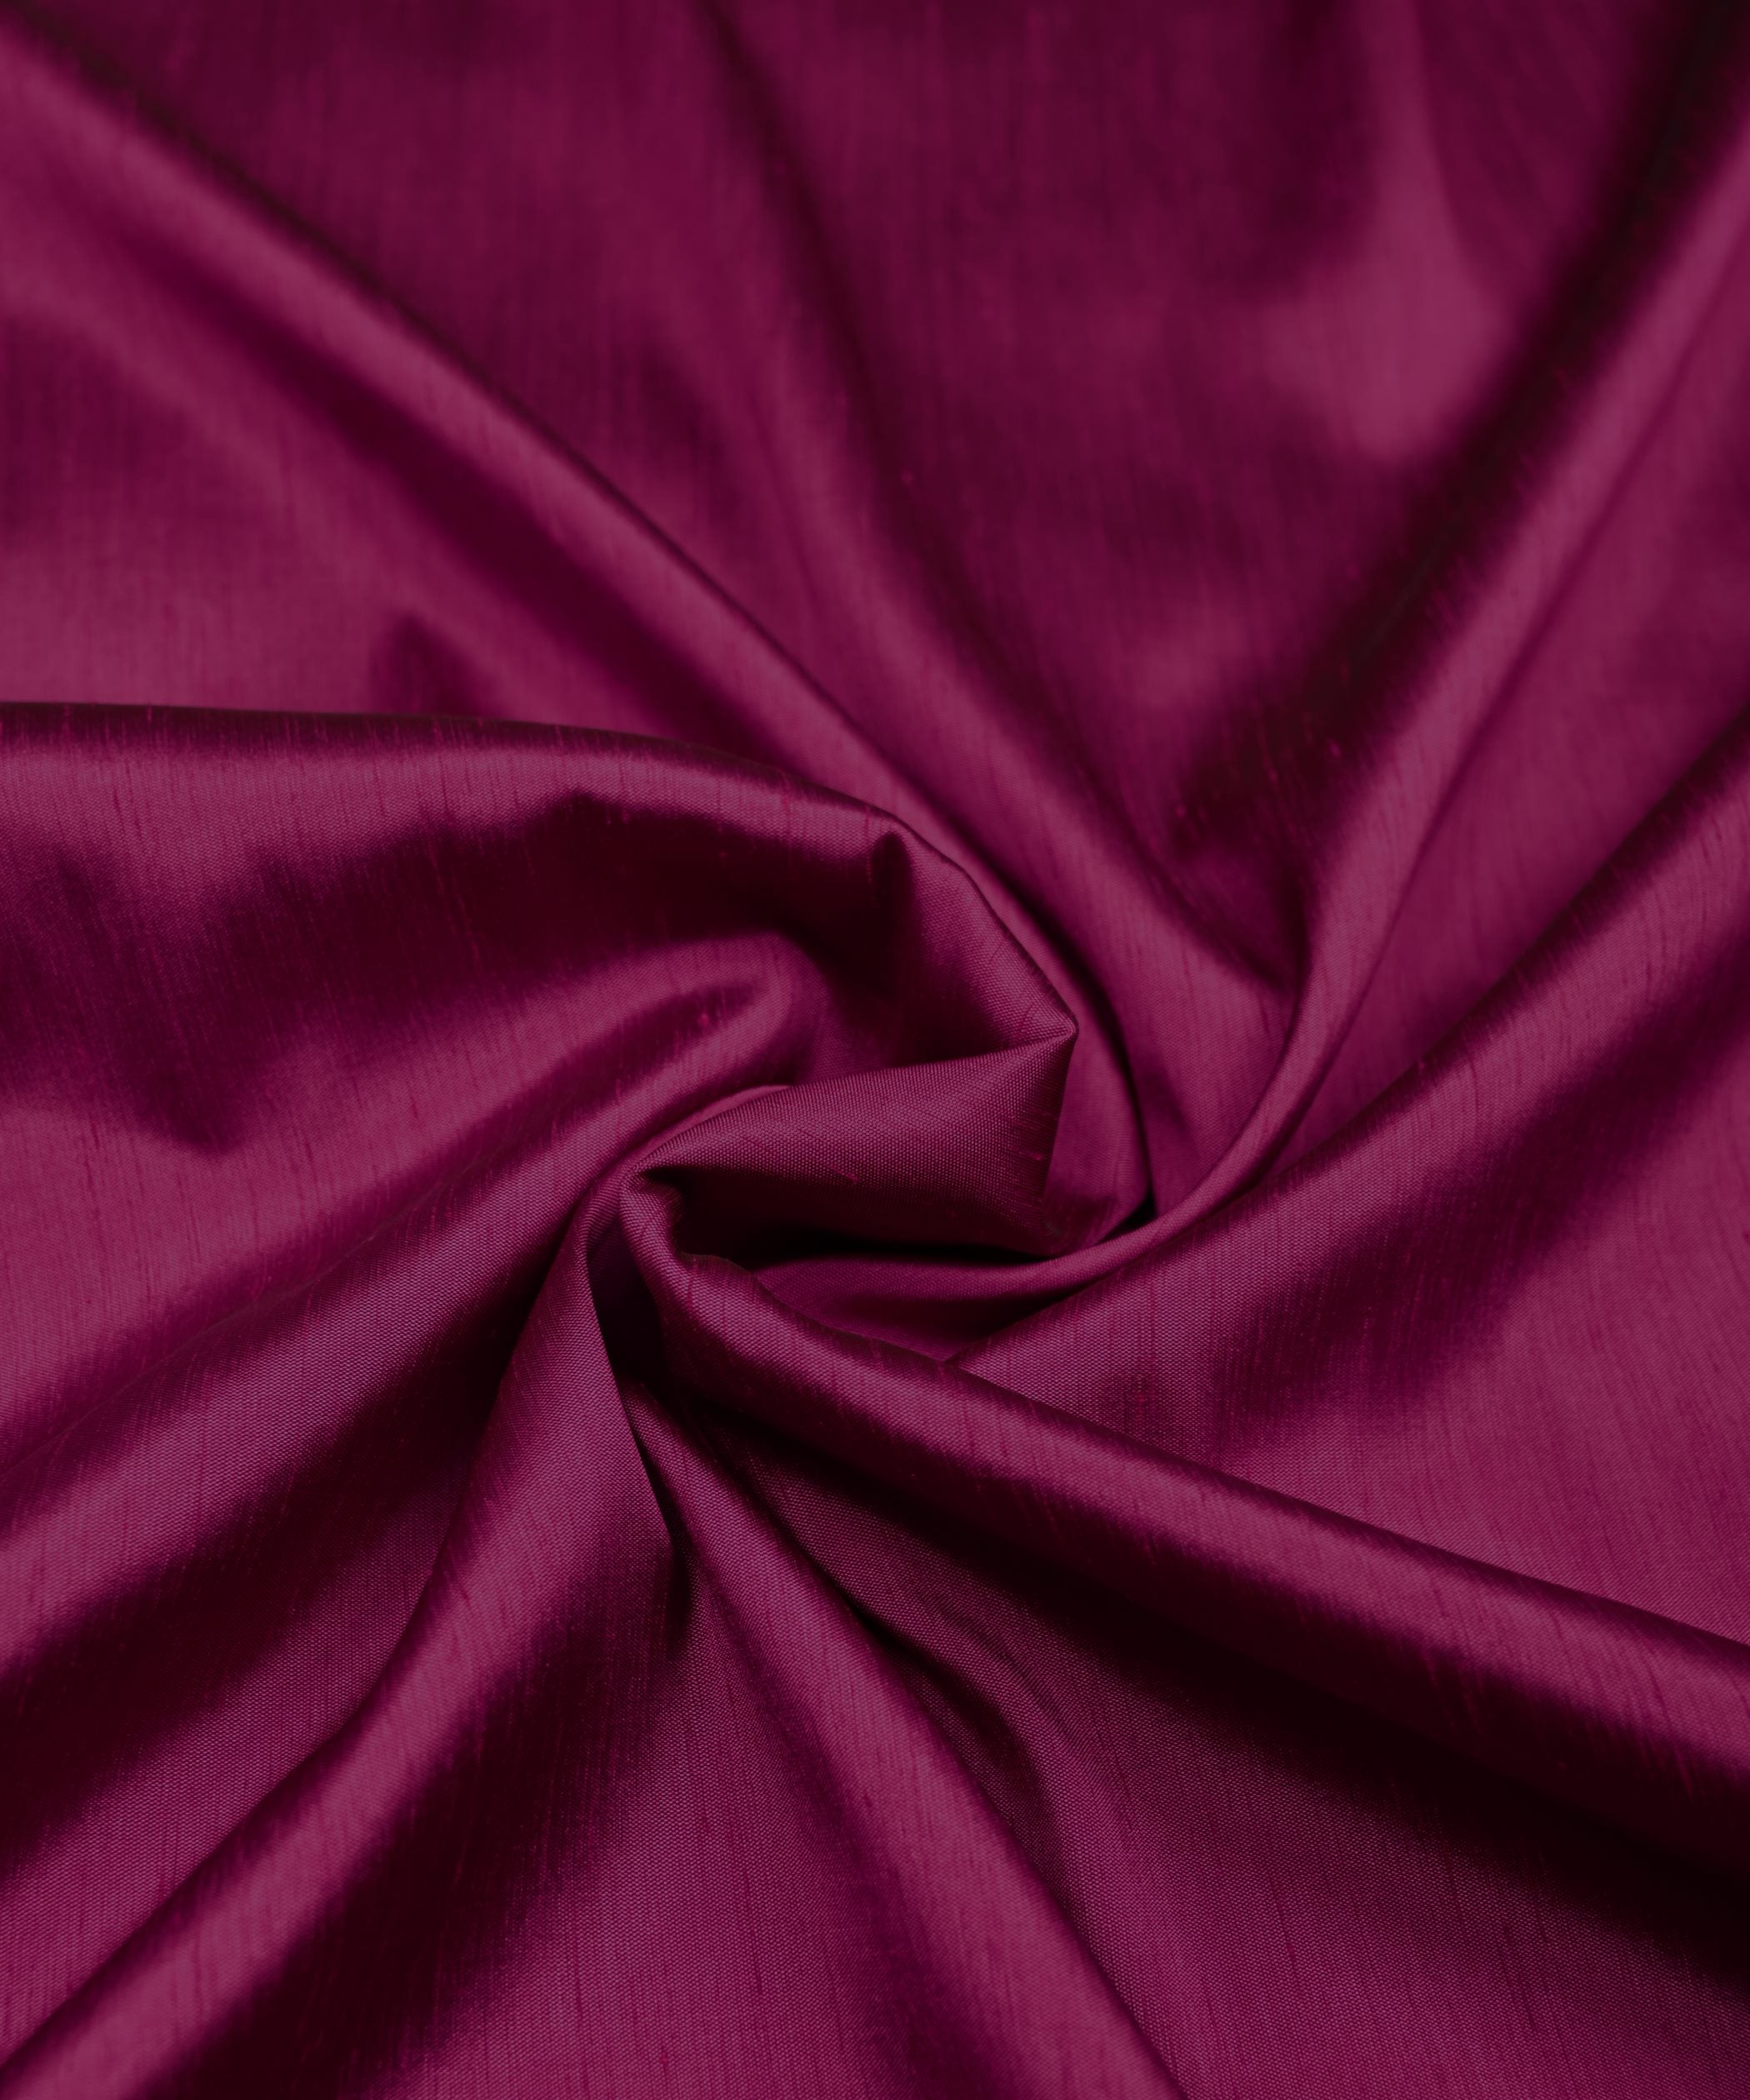 Hot Pink Plain Dyed Satin Slub Fabric